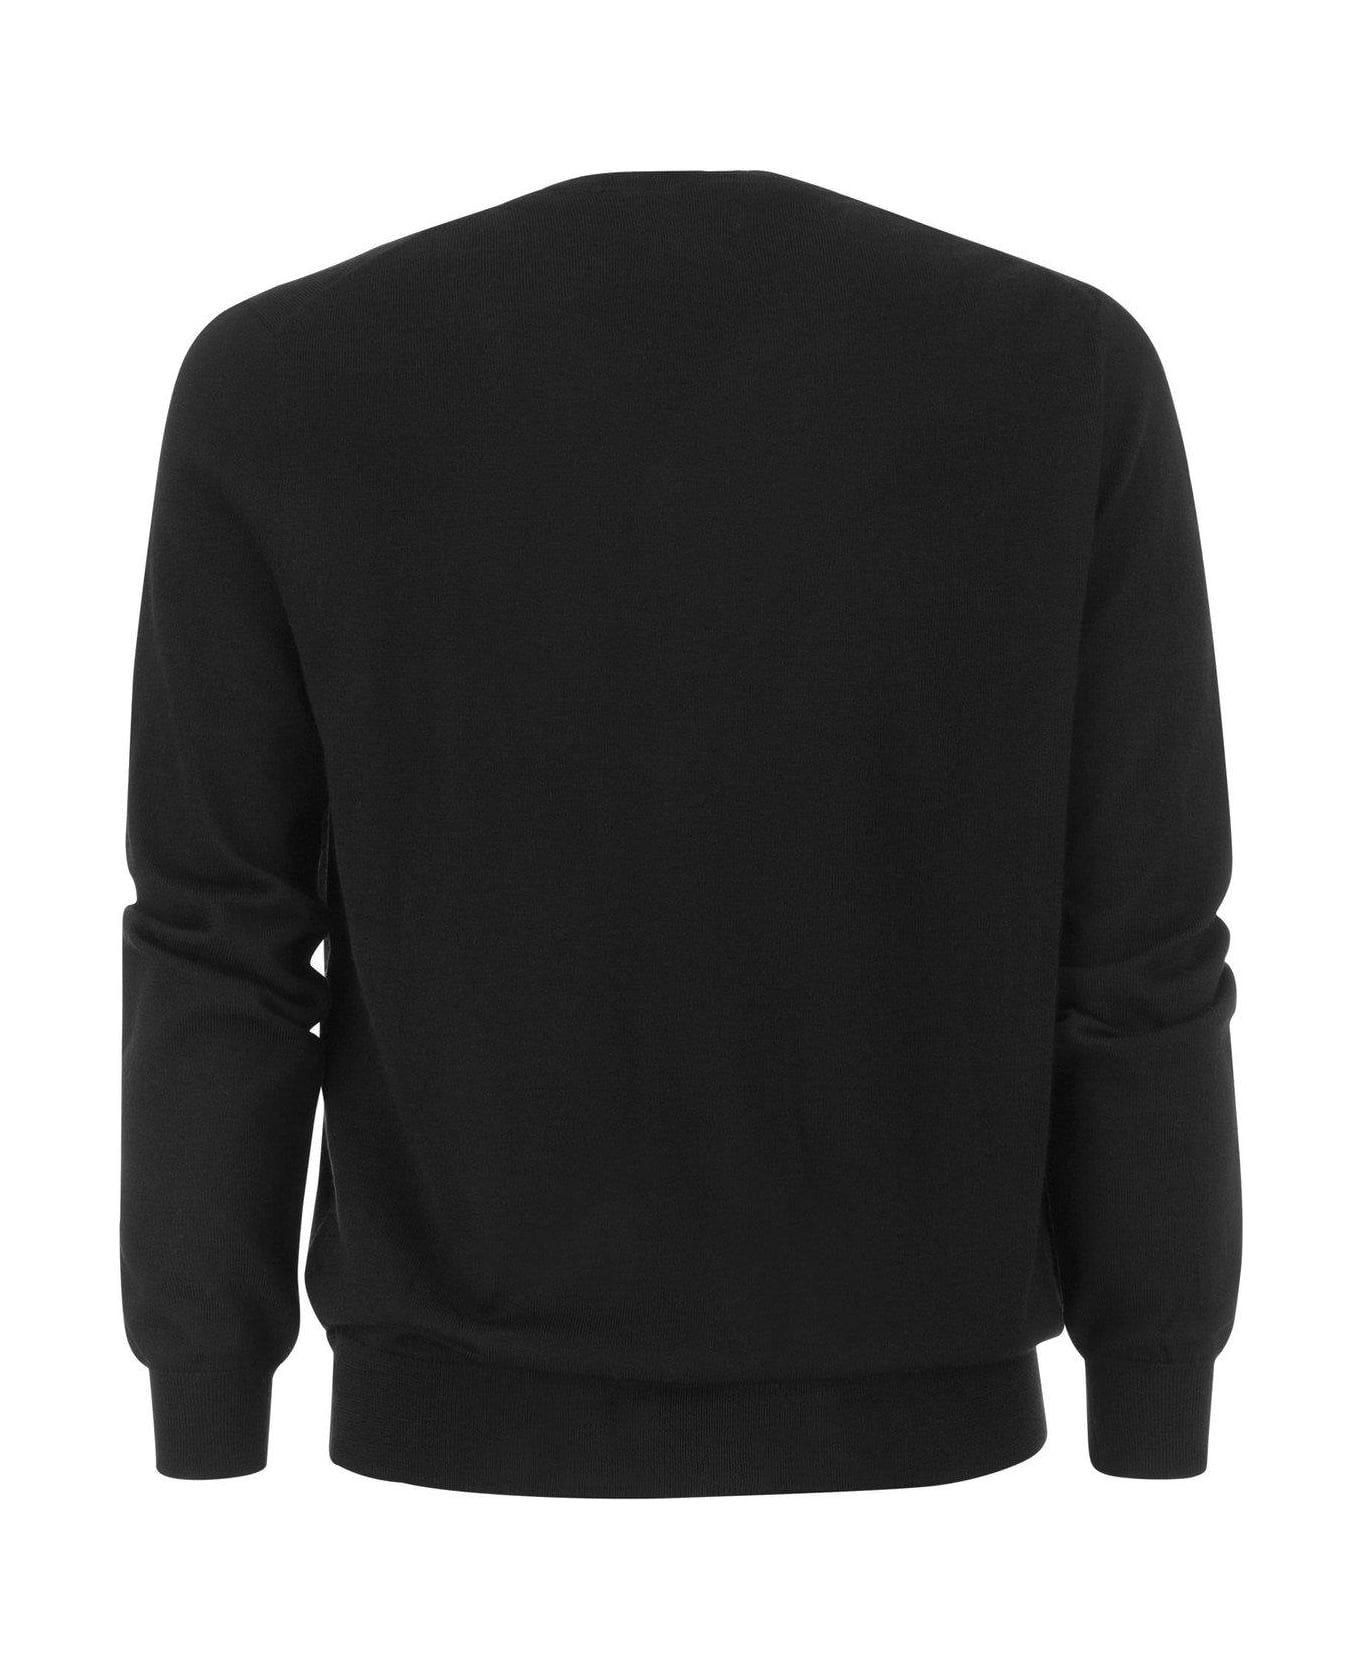 Ralph Lauren Logo Embroidered Crewneck Sweater - Polo Black